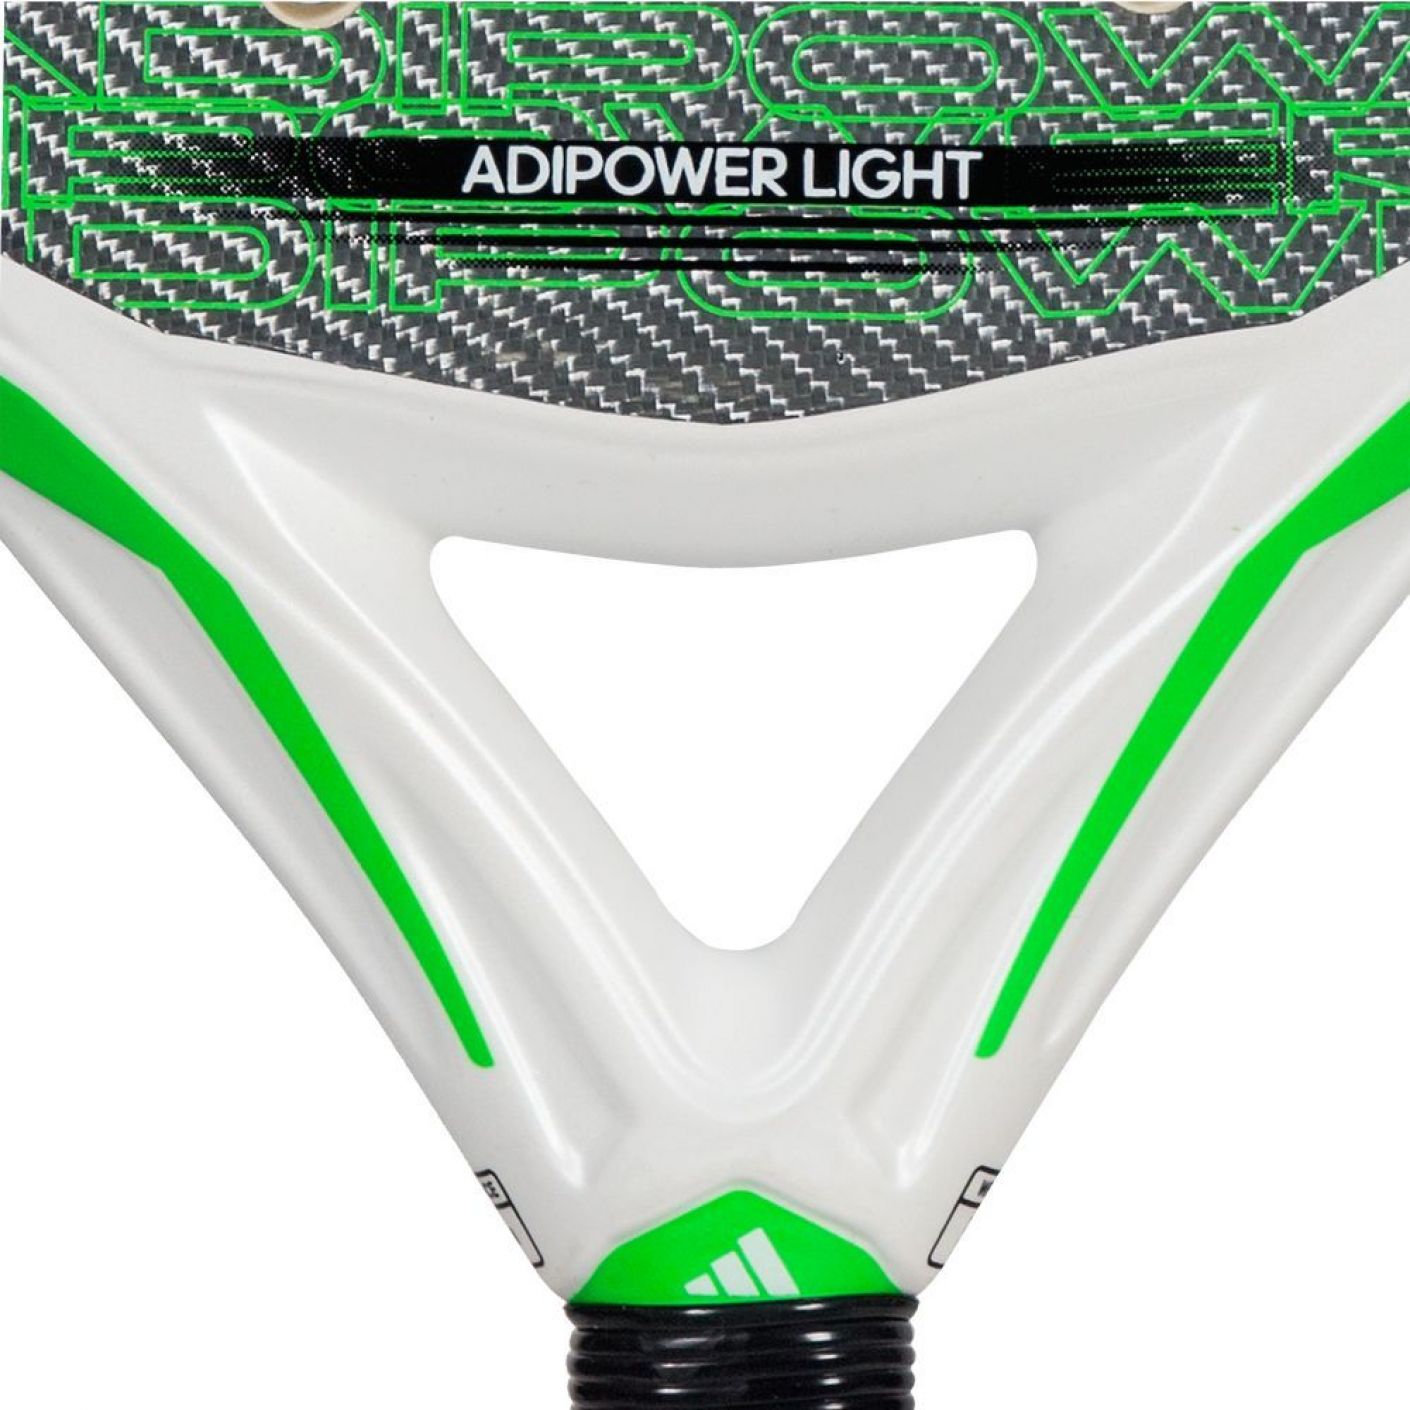 Adidas Adipower Light 3.3 Mafalda Fernandes